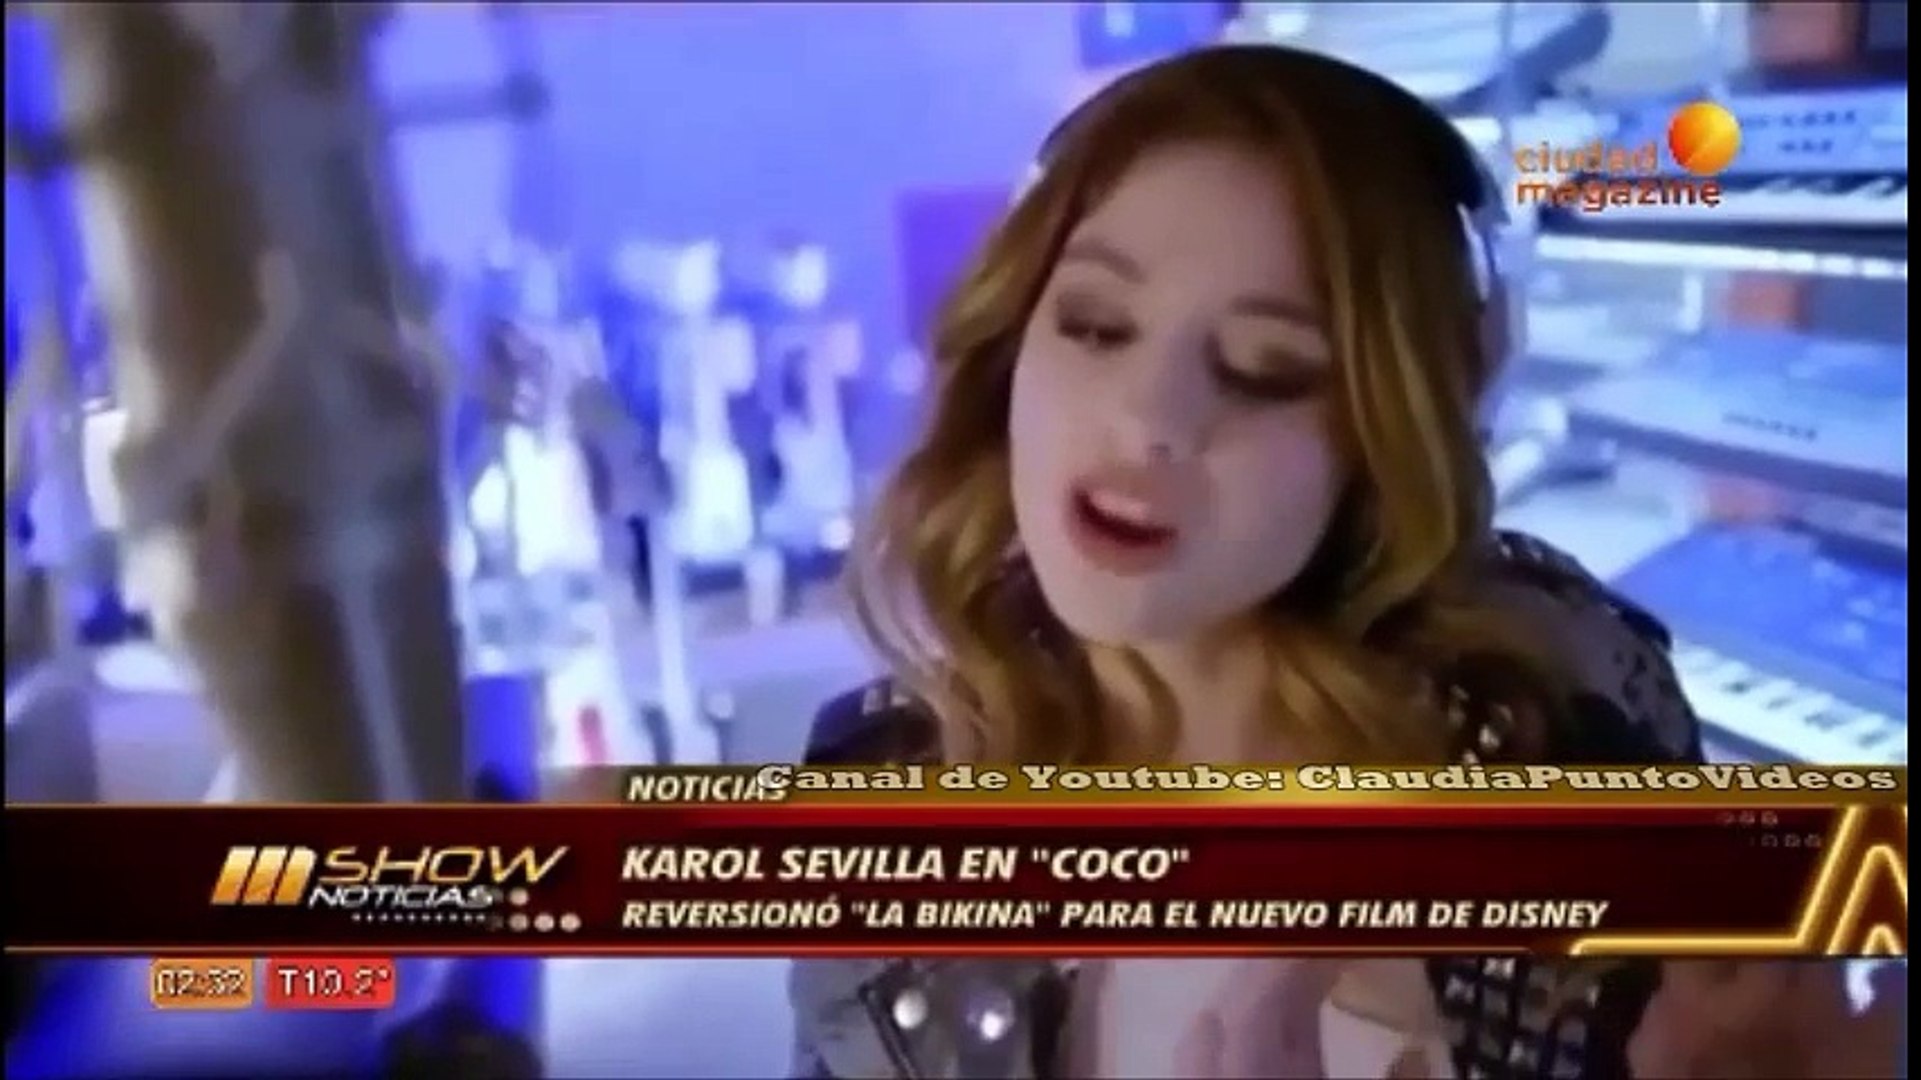 Karol Sevilla reversionó "La Bikina" para el film "Coco" - Vídeo Dailymotion